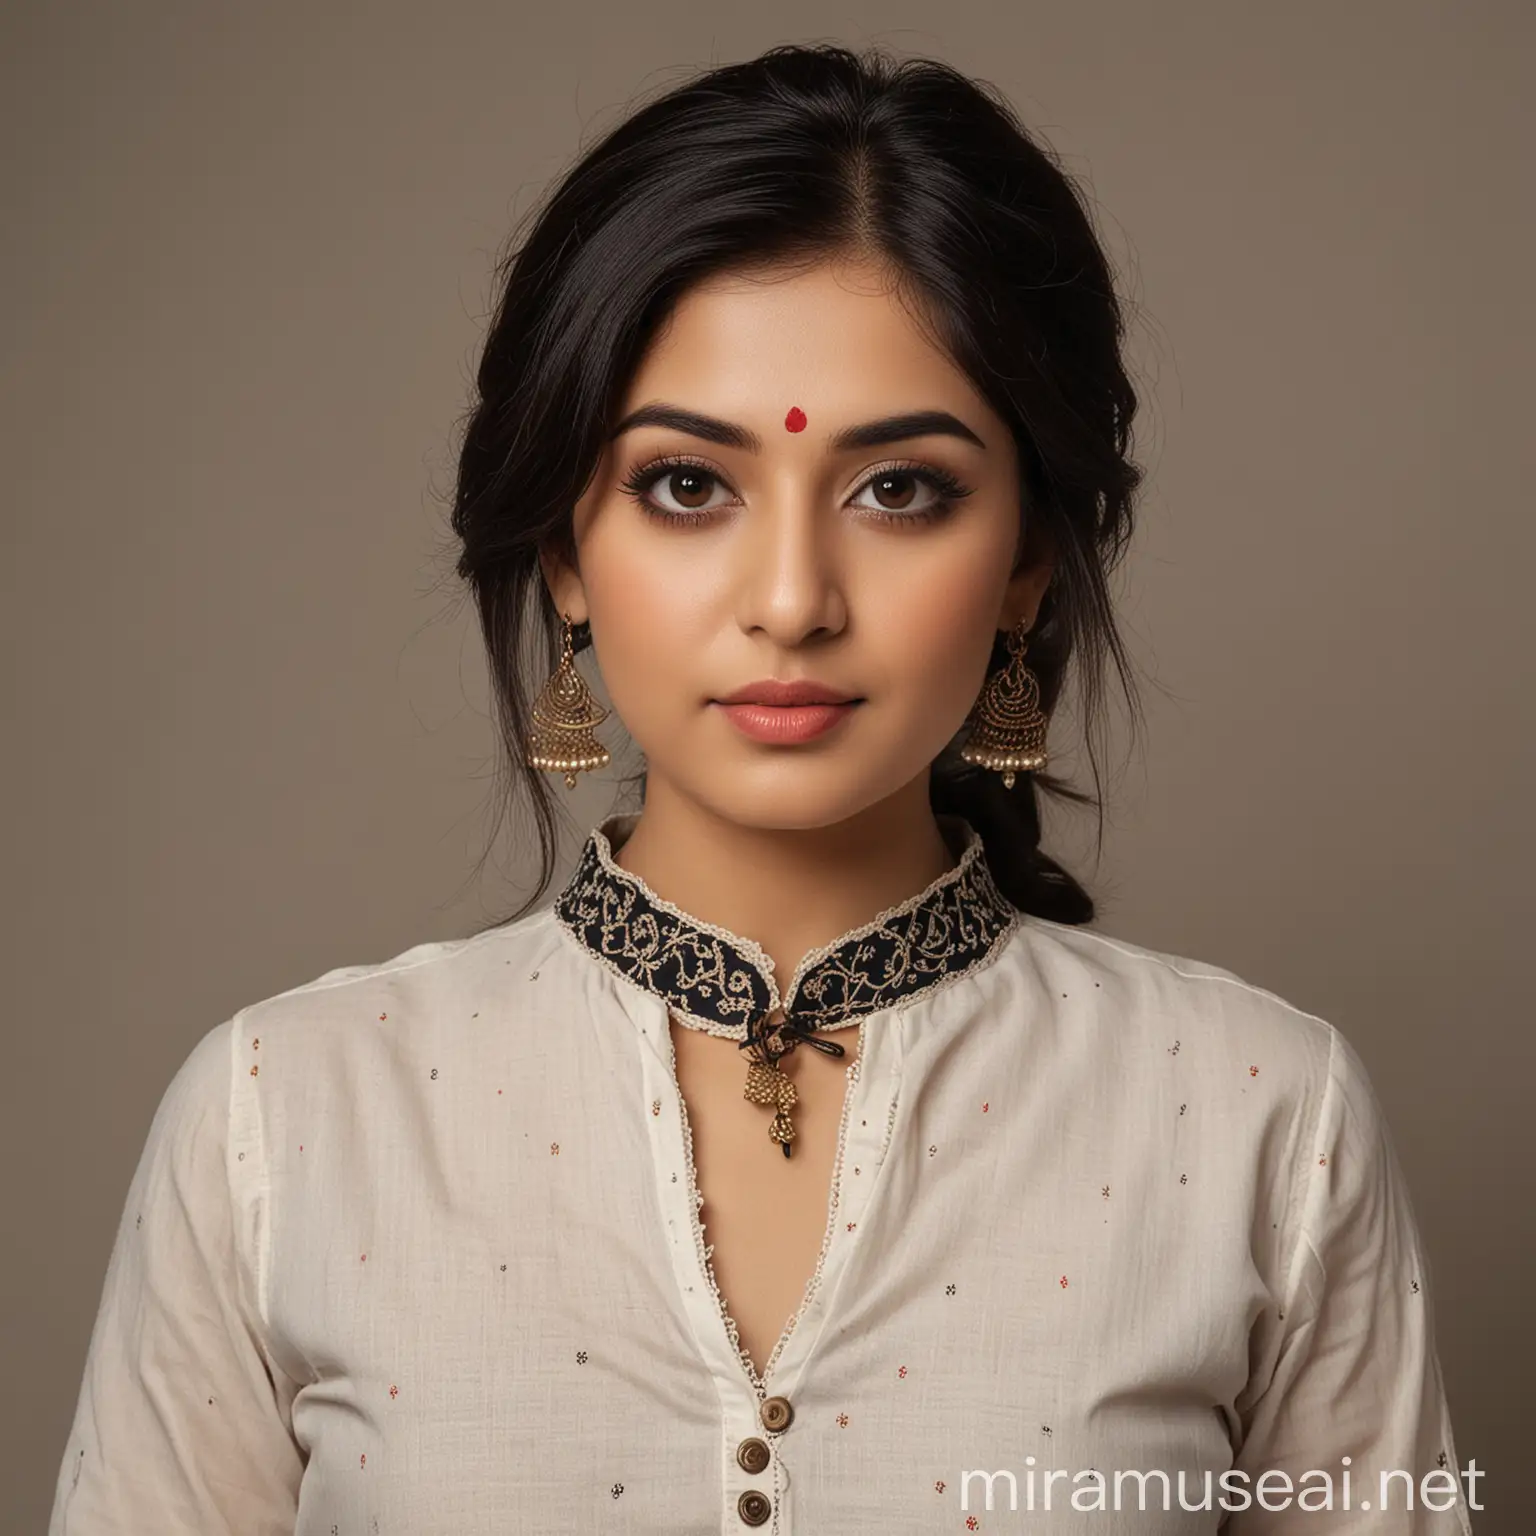 Beautiful Pakistani Women in Traditional Cotton Blouses Medium Shot Indian Makeup Pose